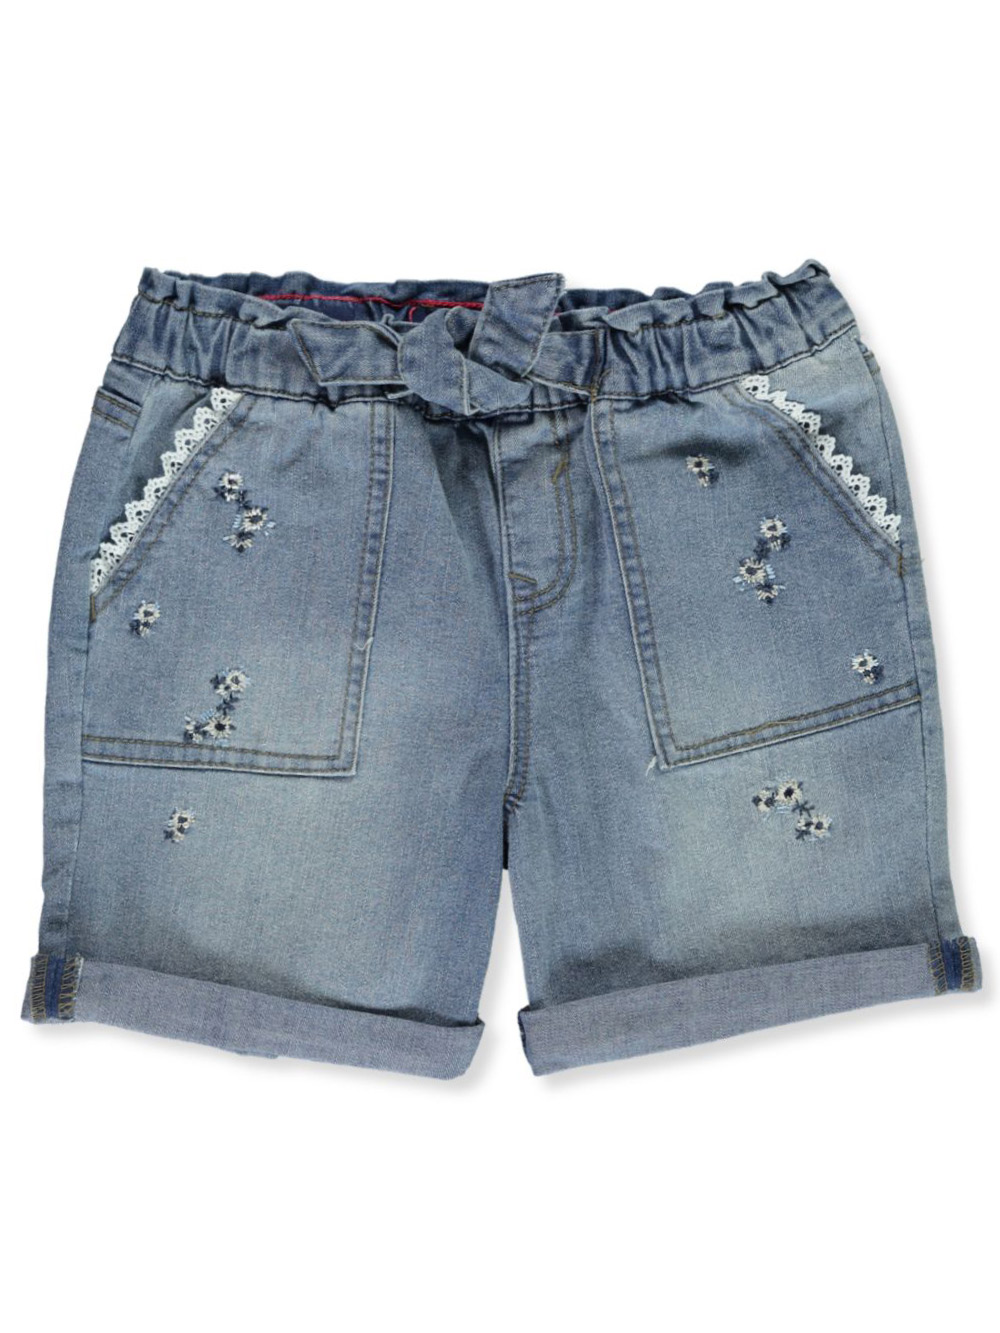 floral jean shorts